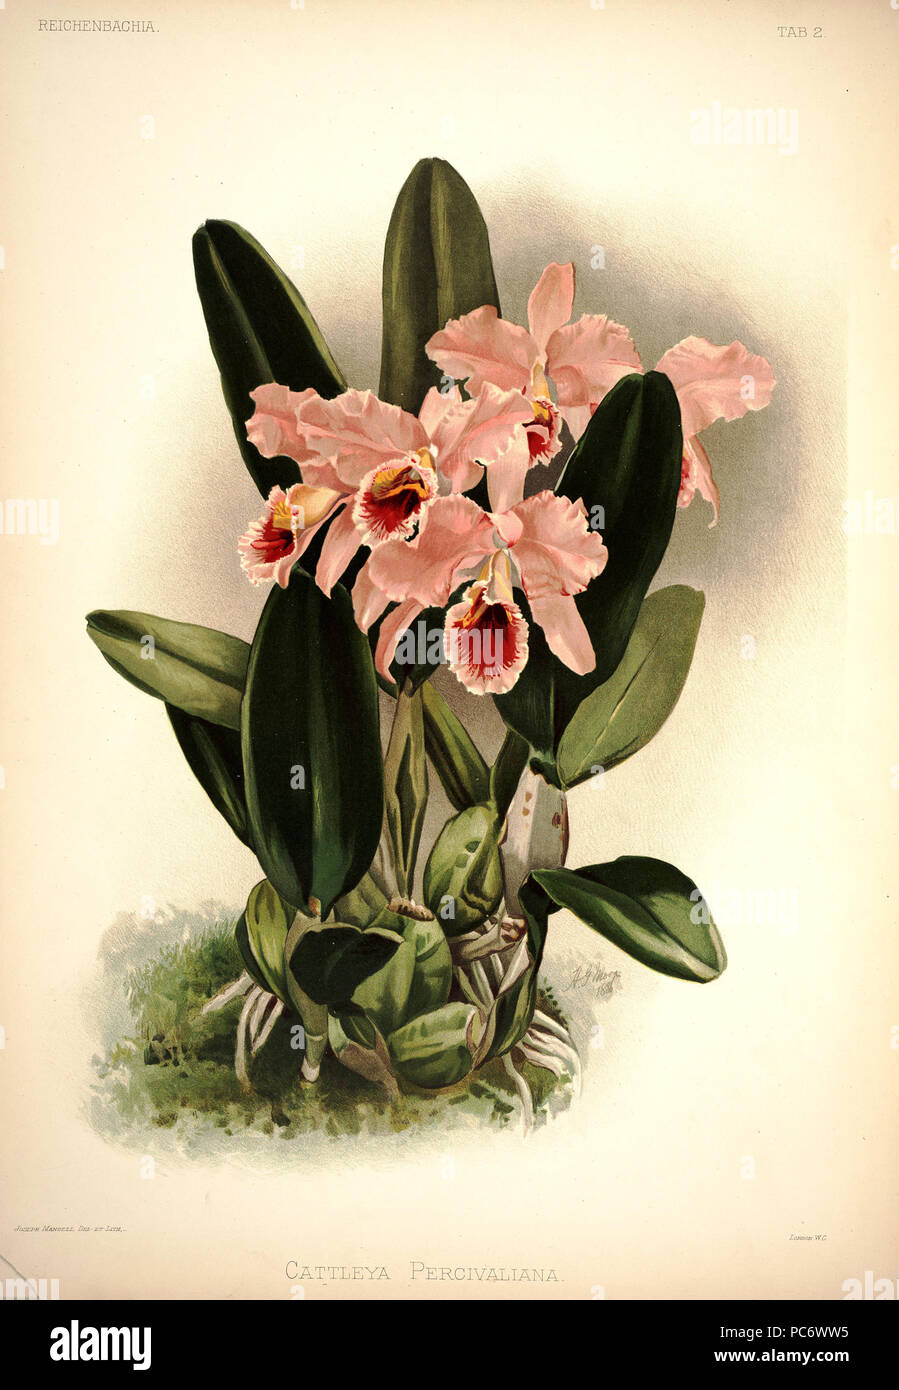 220 Frederick Sander - Reichenbachia I plate 02 (1888) - Cattleya percivaliana Stock Photo